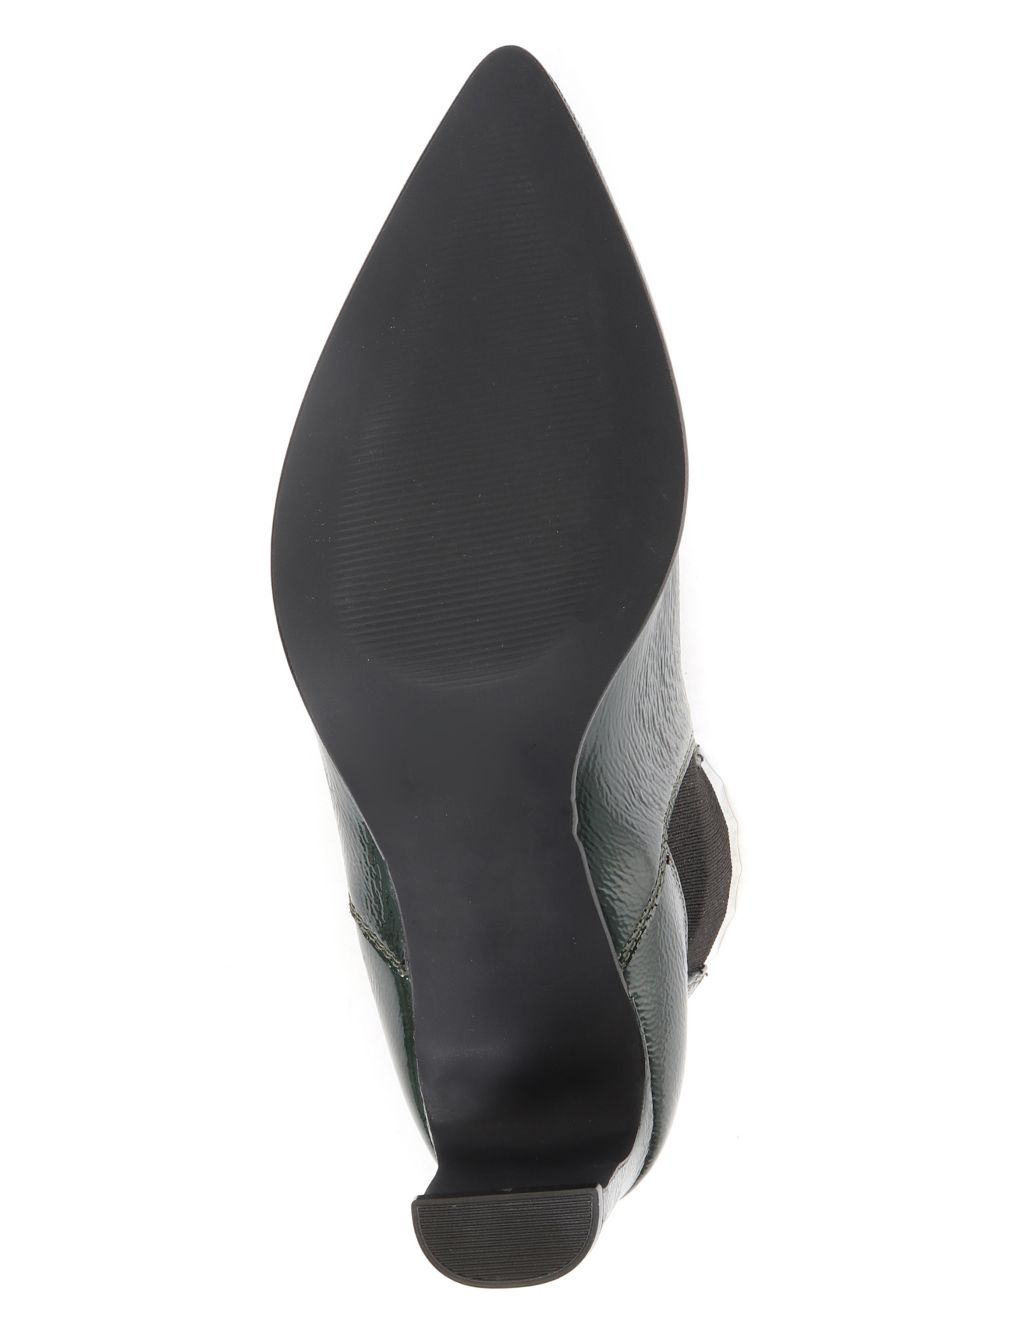 Leather Patent Chelsea Block Heel Boots image 4